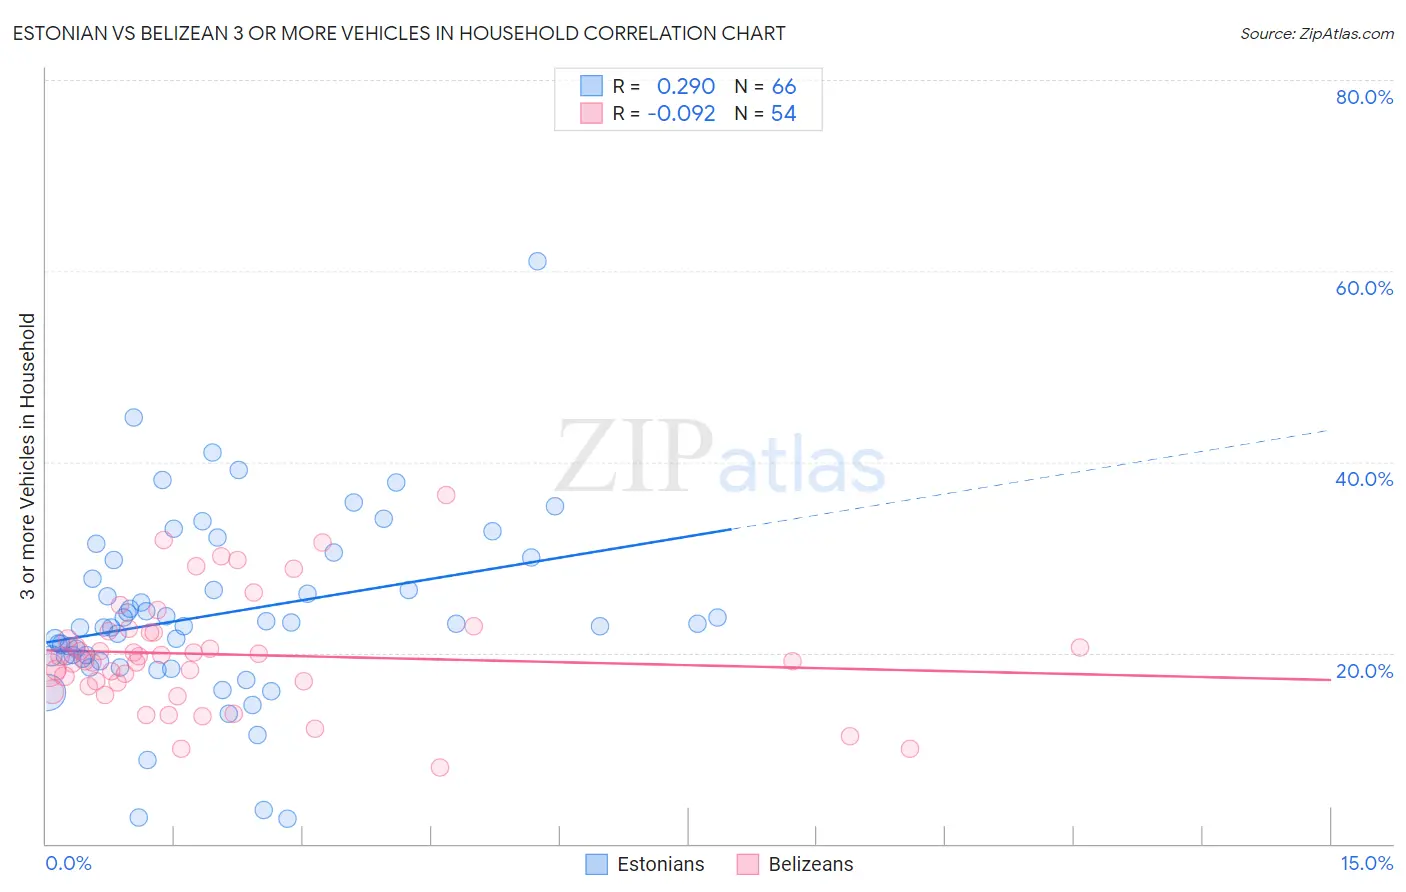 Estonian vs Belizean 3 or more Vehicles in Household